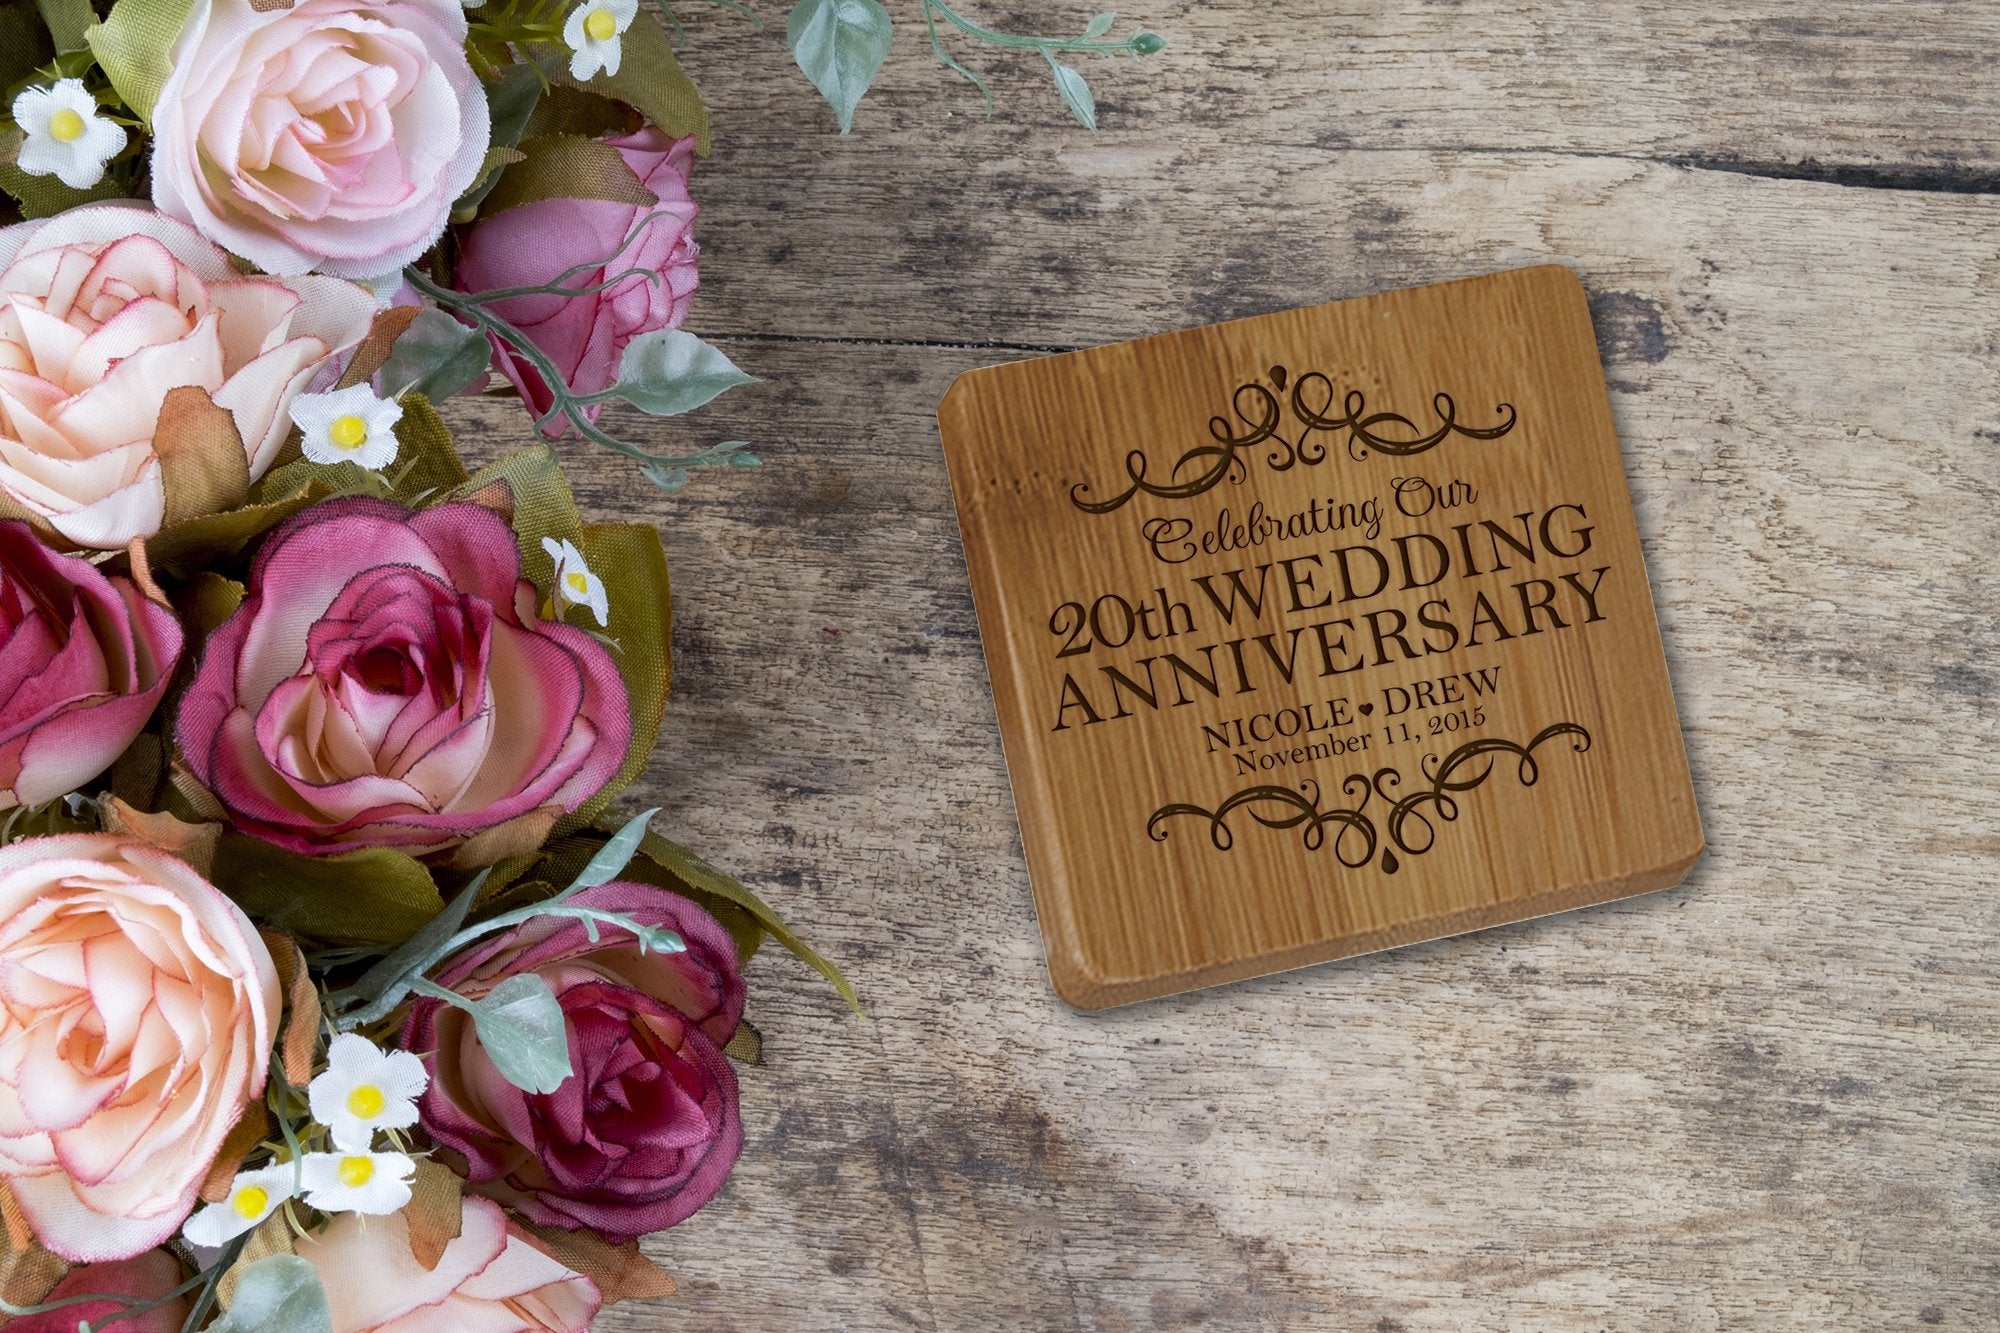 Personalized 20th Wedding Anniversary Bamboo 6pcs Coaster Set - LifeSong Milestones